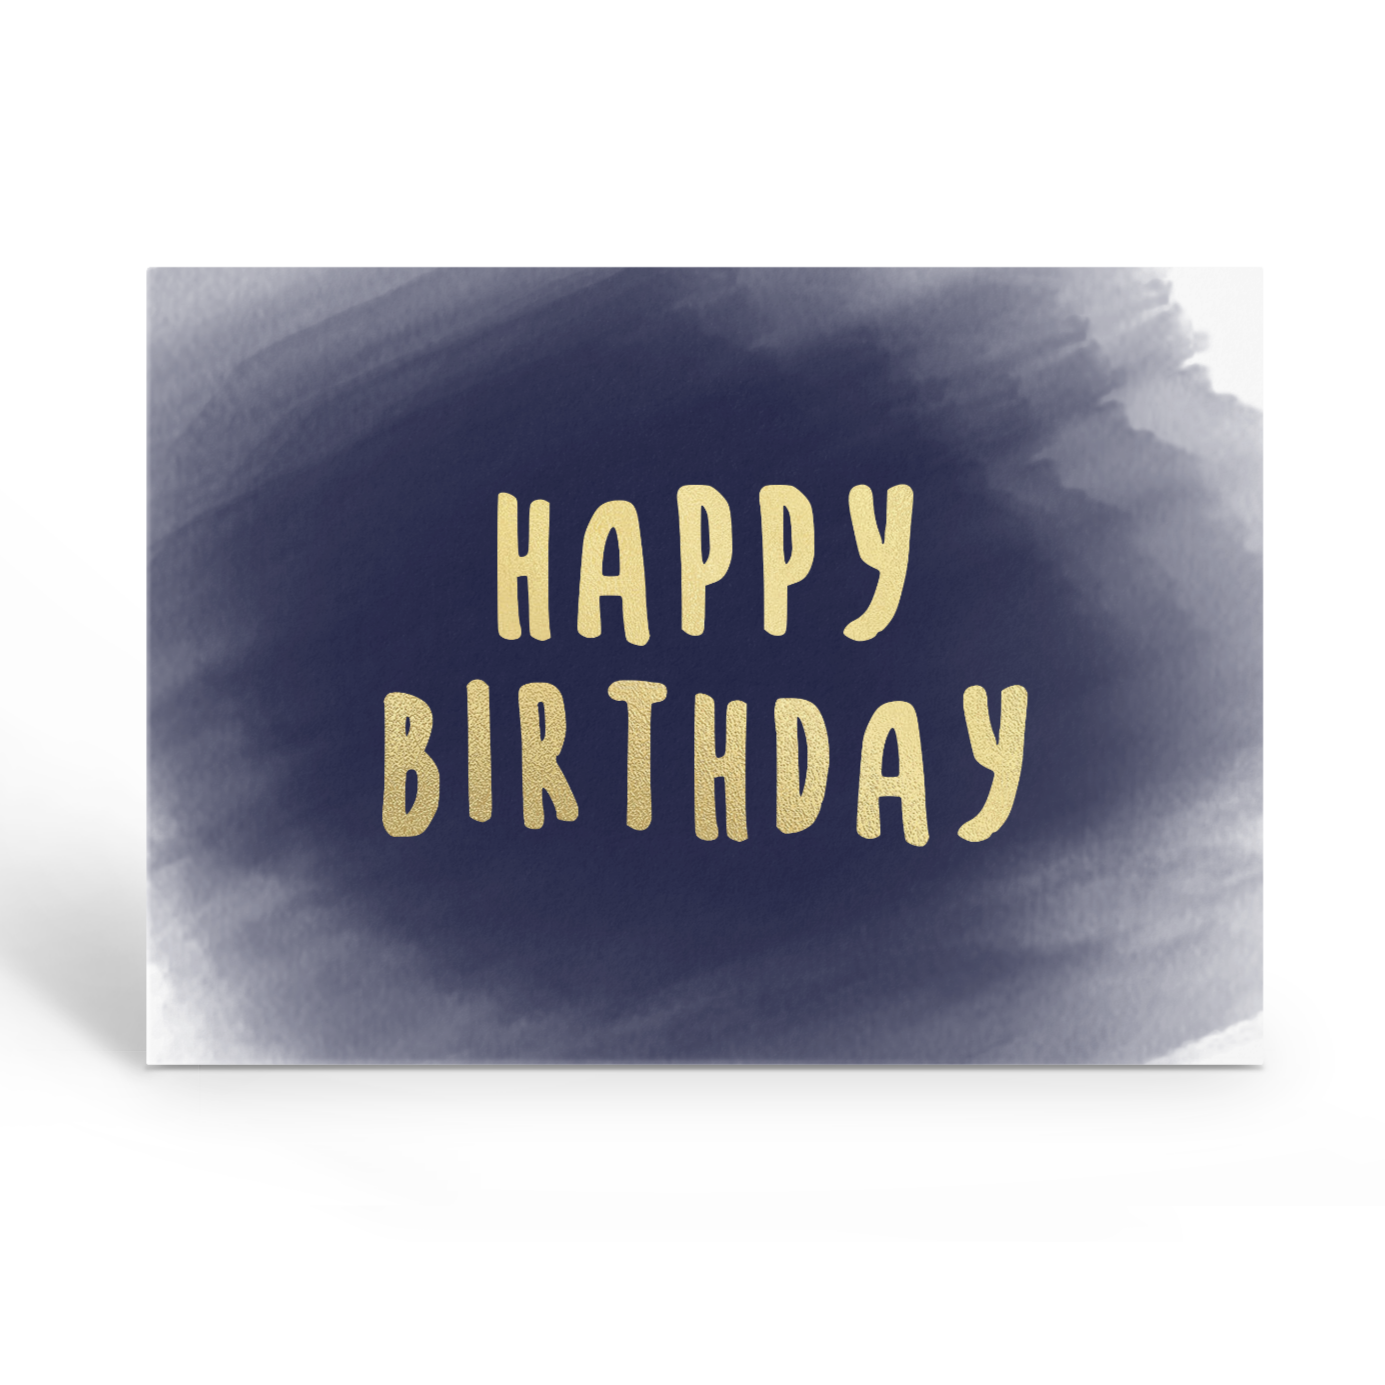 Foiled Happy Birthday Card